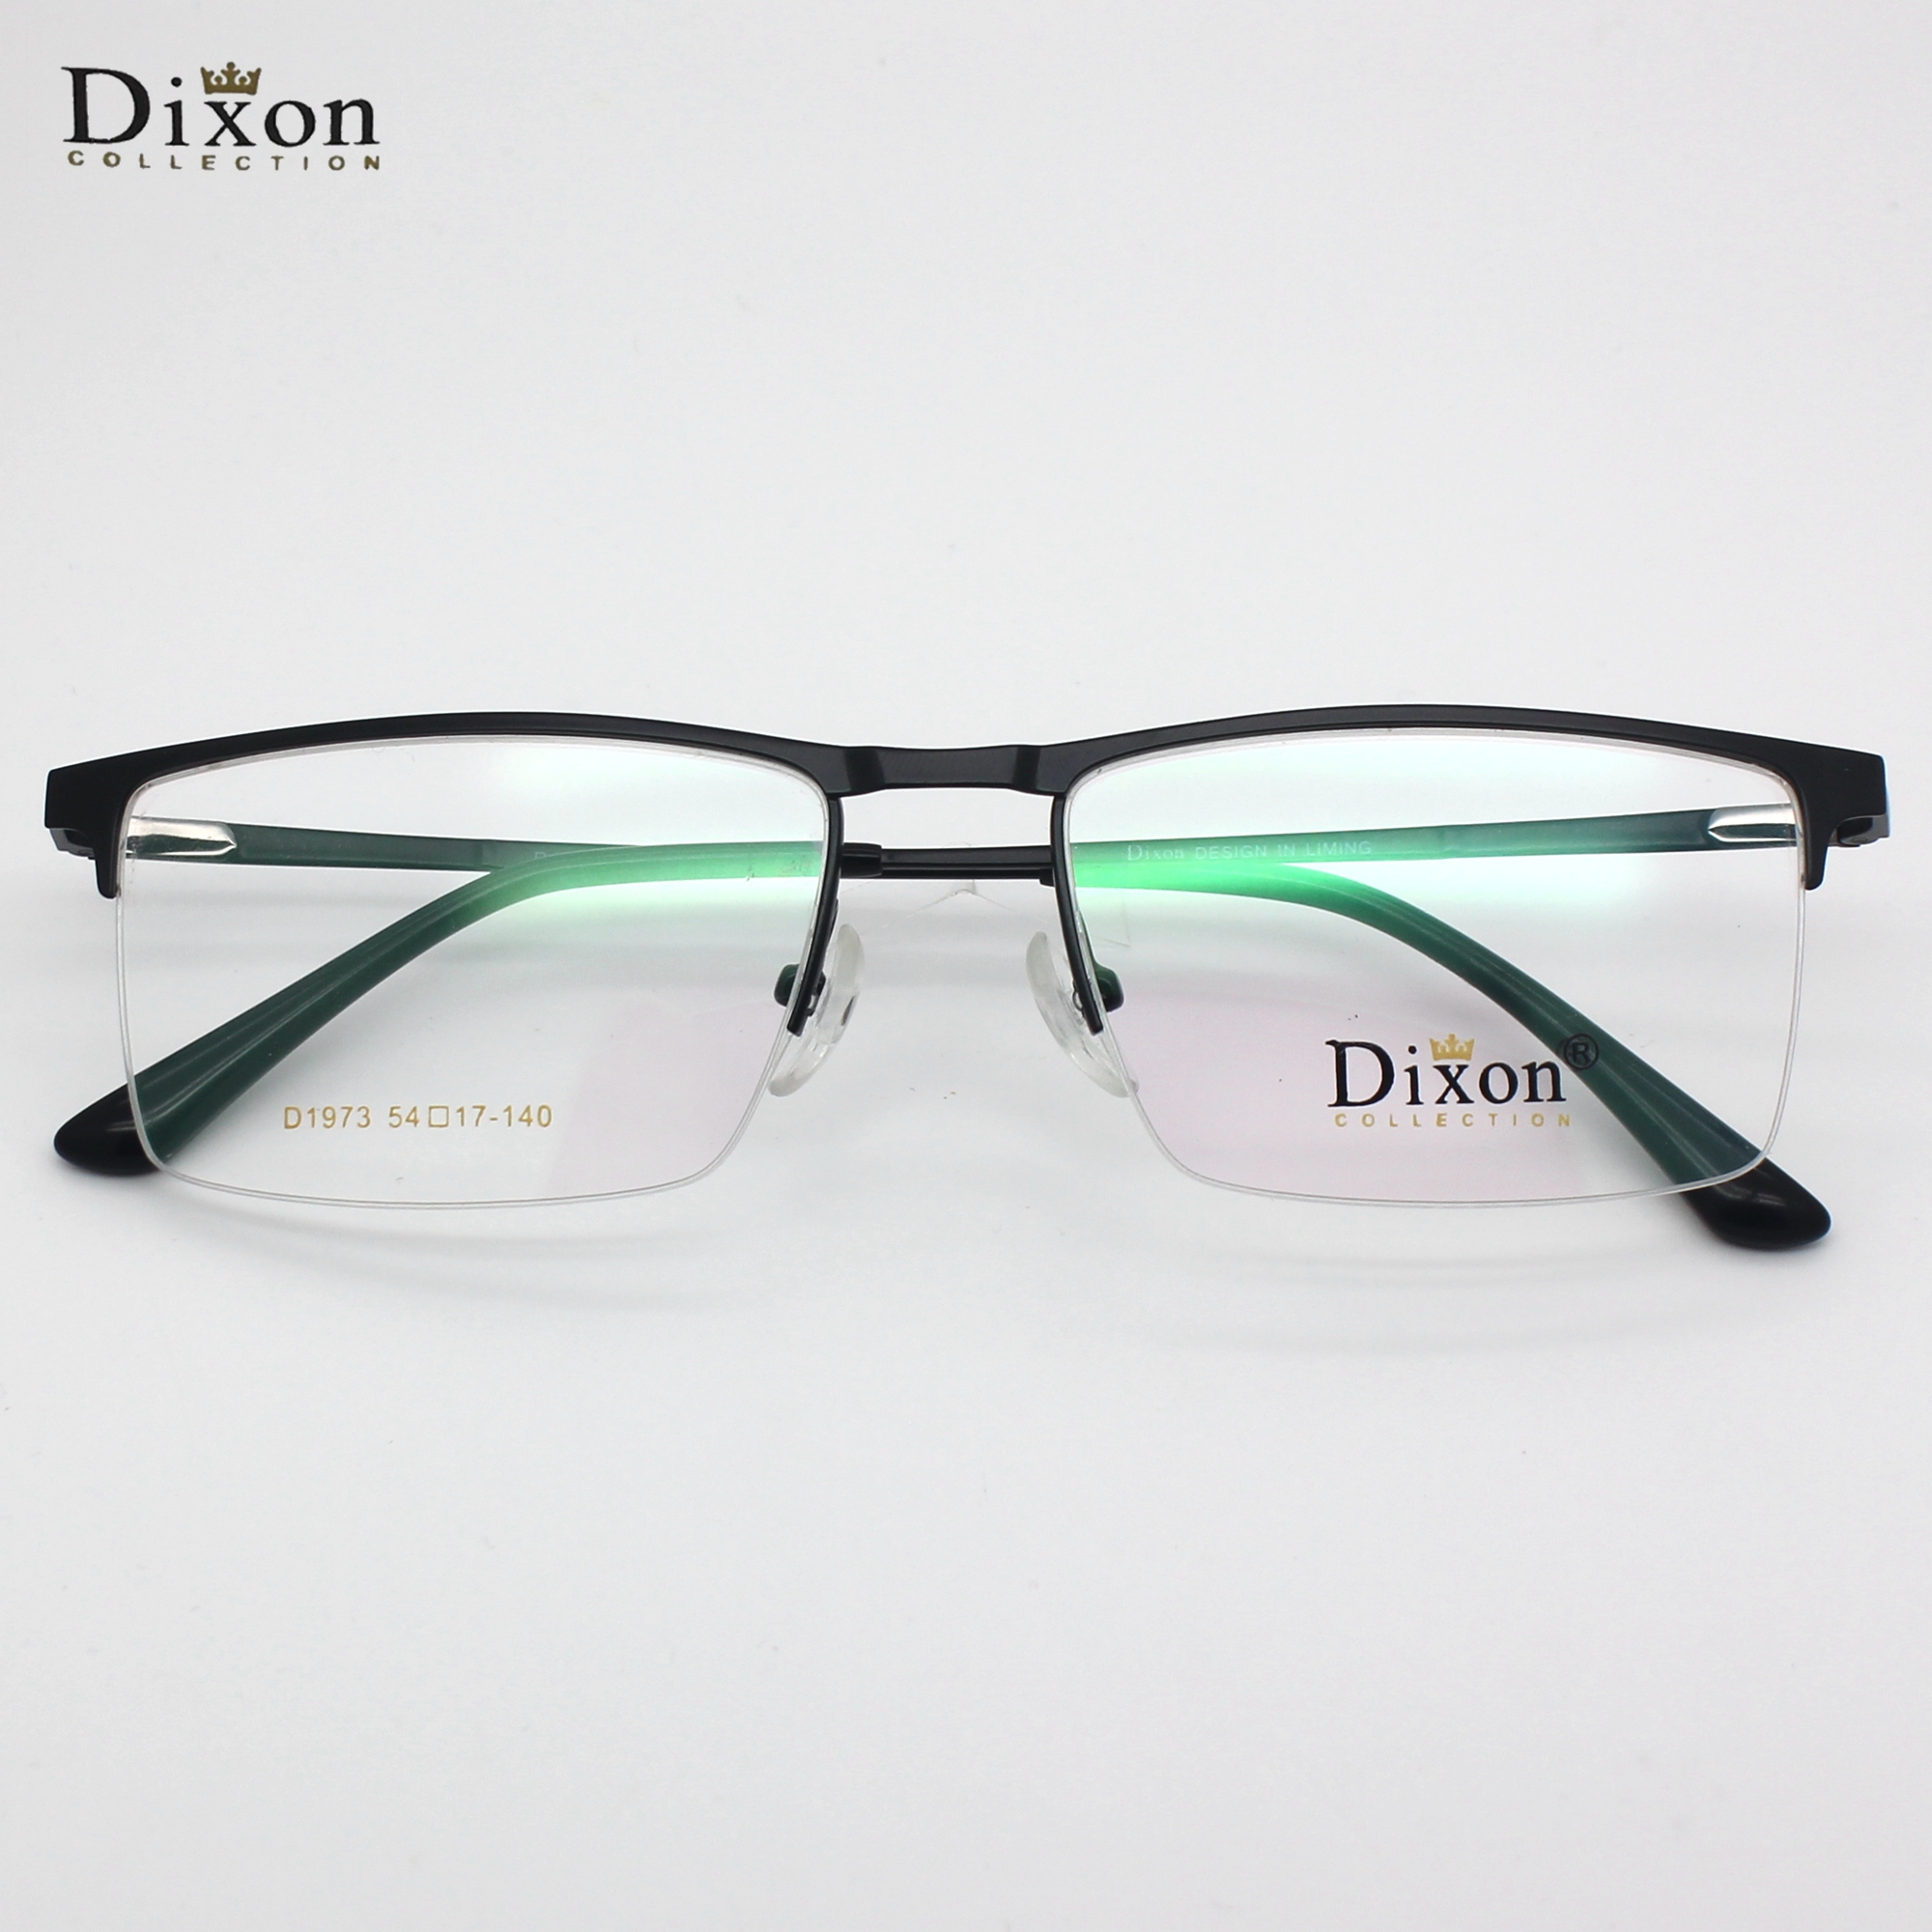 Dixon迪克逊眼镜架超轻商务男士方形半框近视眼镜防蓝光变色D1973